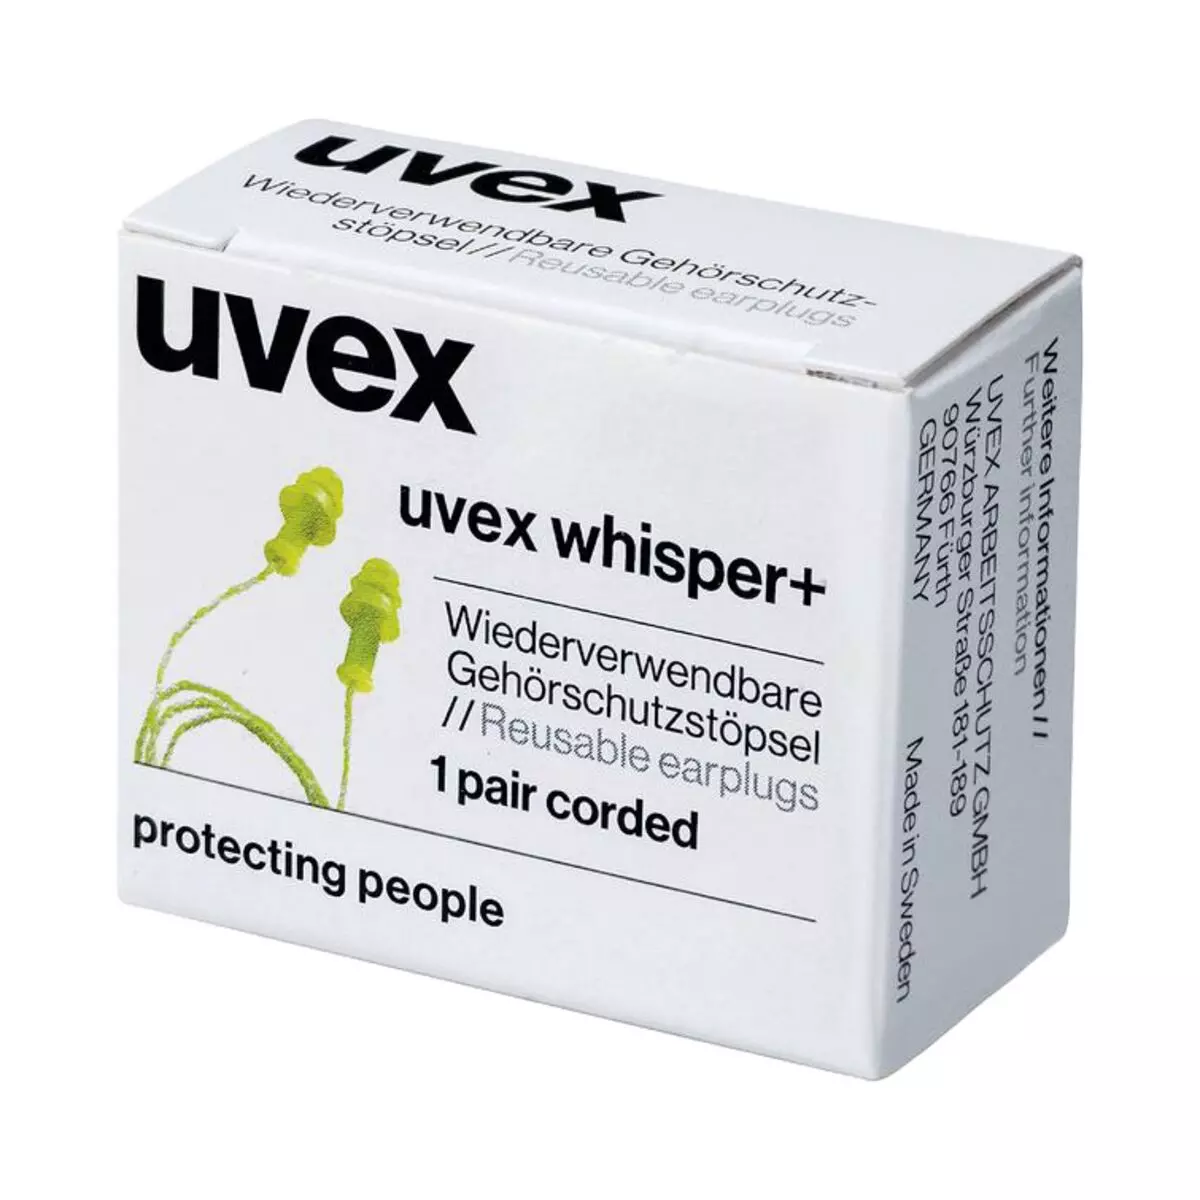 uvex whisper+ earplugs with cord